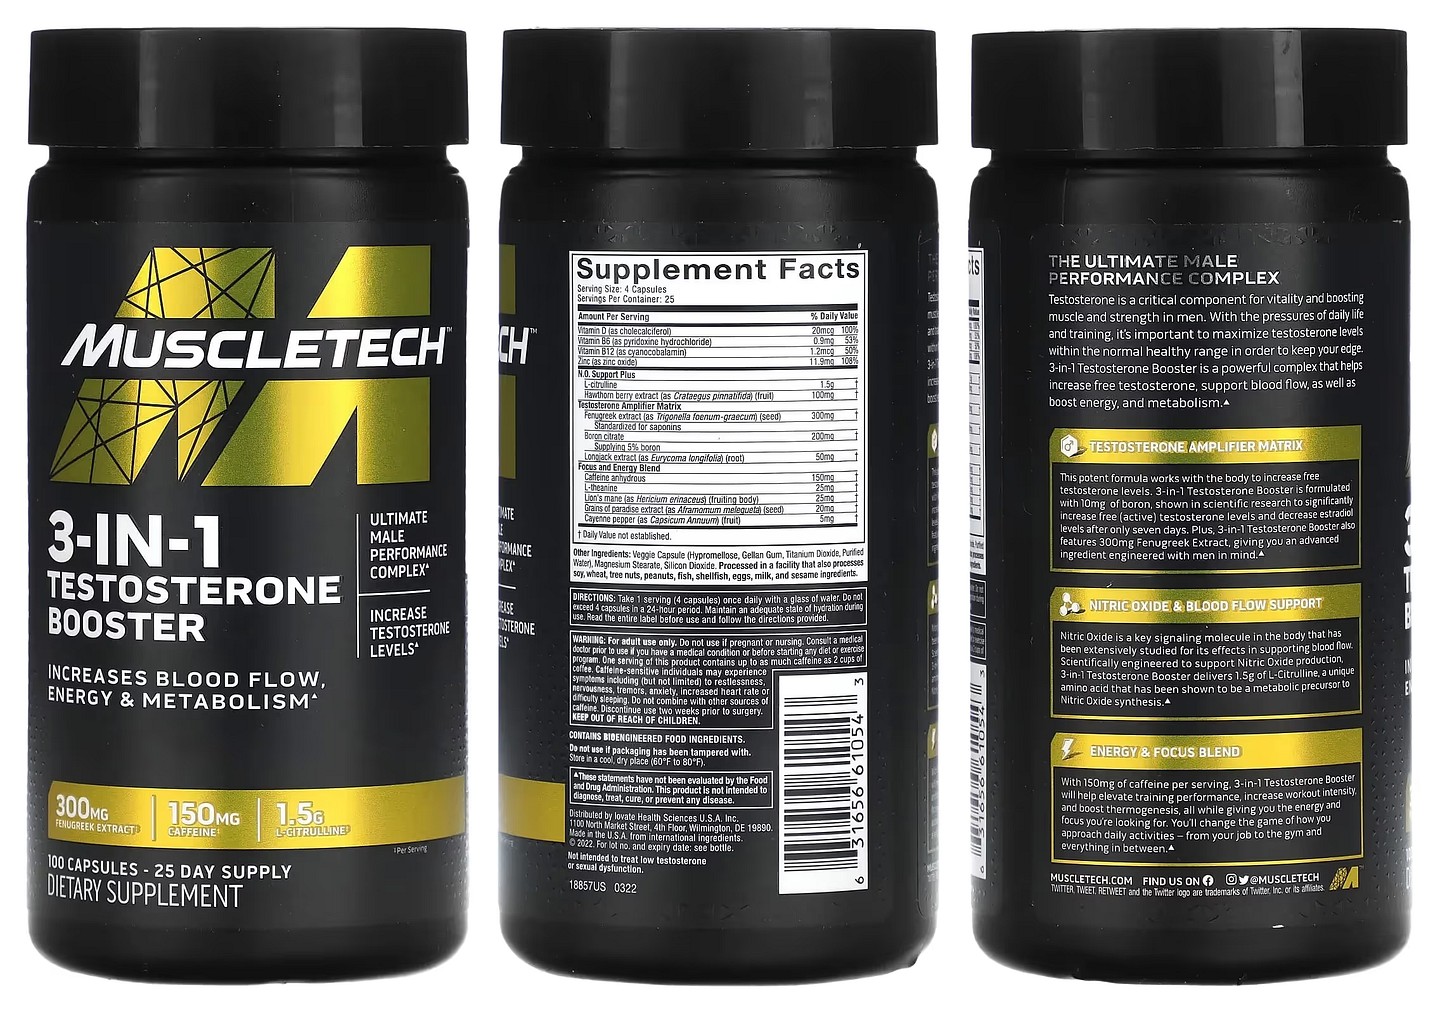 MuscleTech, 3-in-1 Testosterone Booster packaging